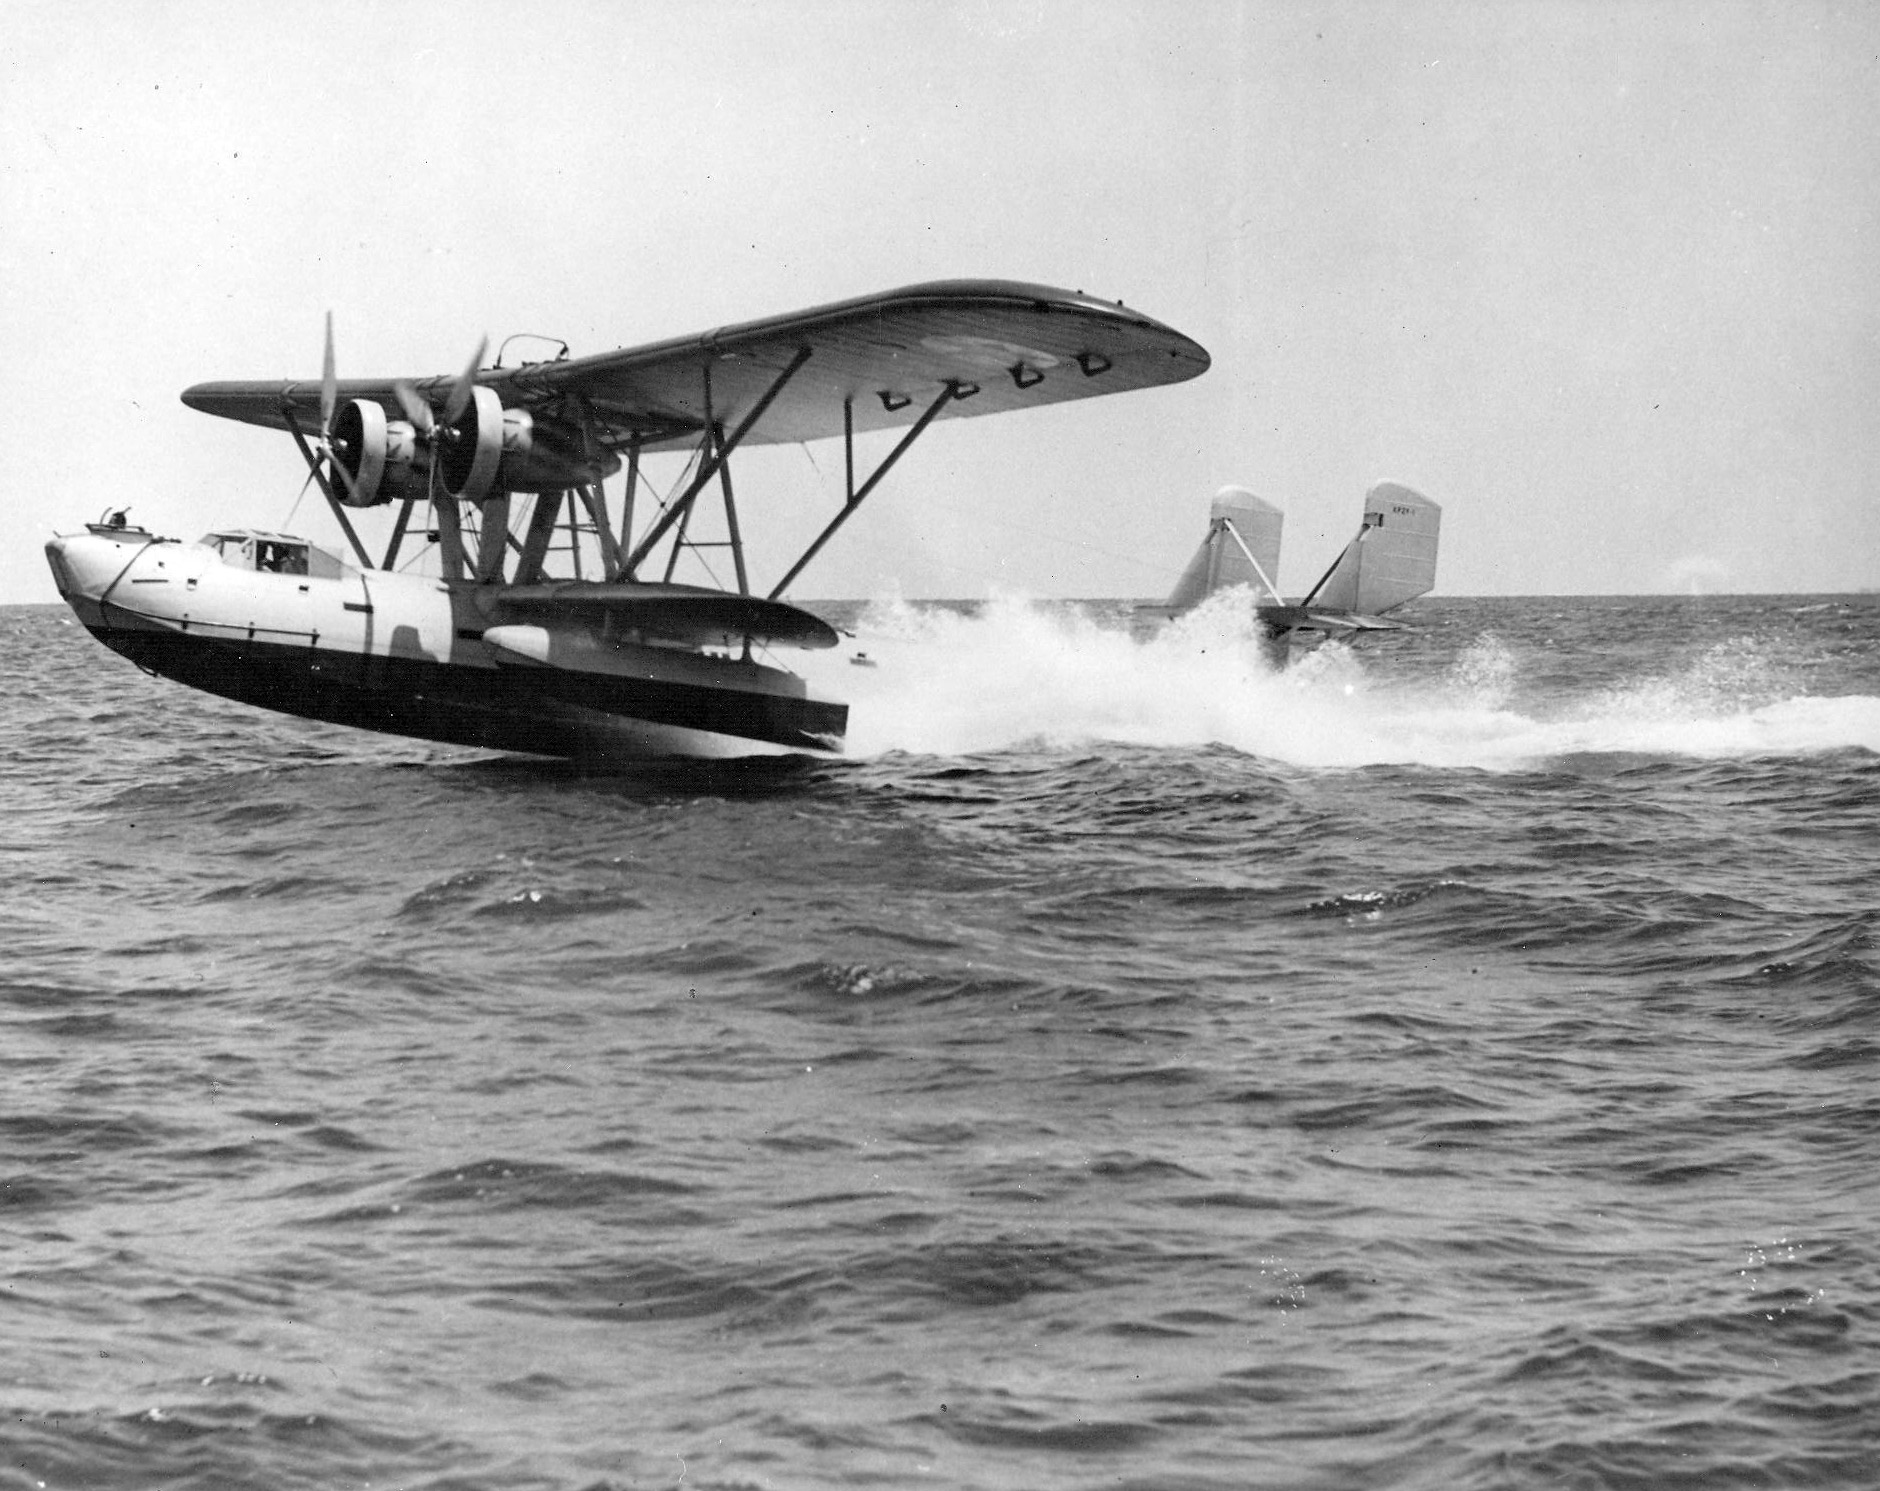 XP2Y-1 prototype aircraft taking off, circa 1932